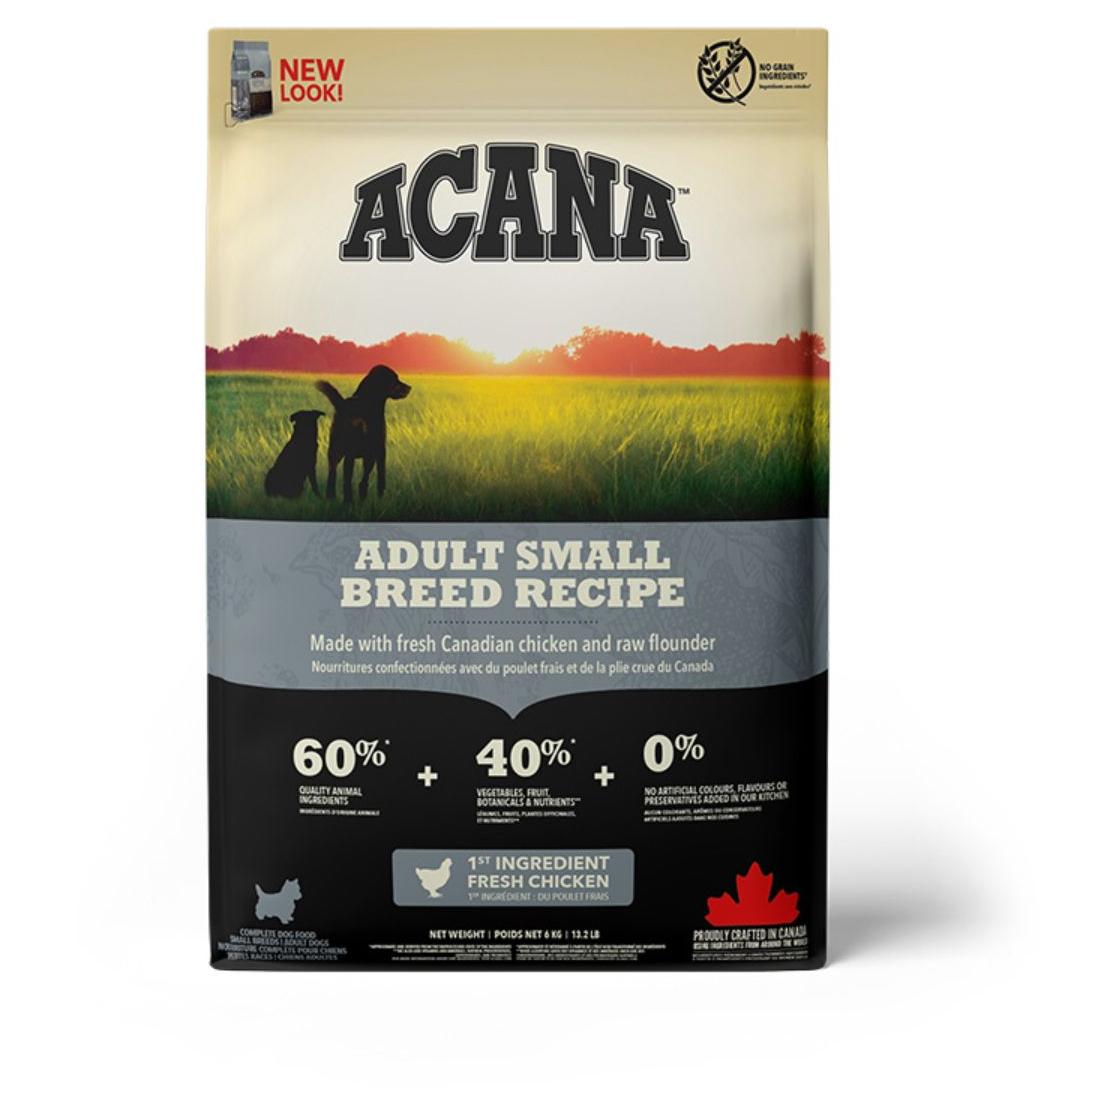 Acana Heritage Small Breed Adult Dog Food